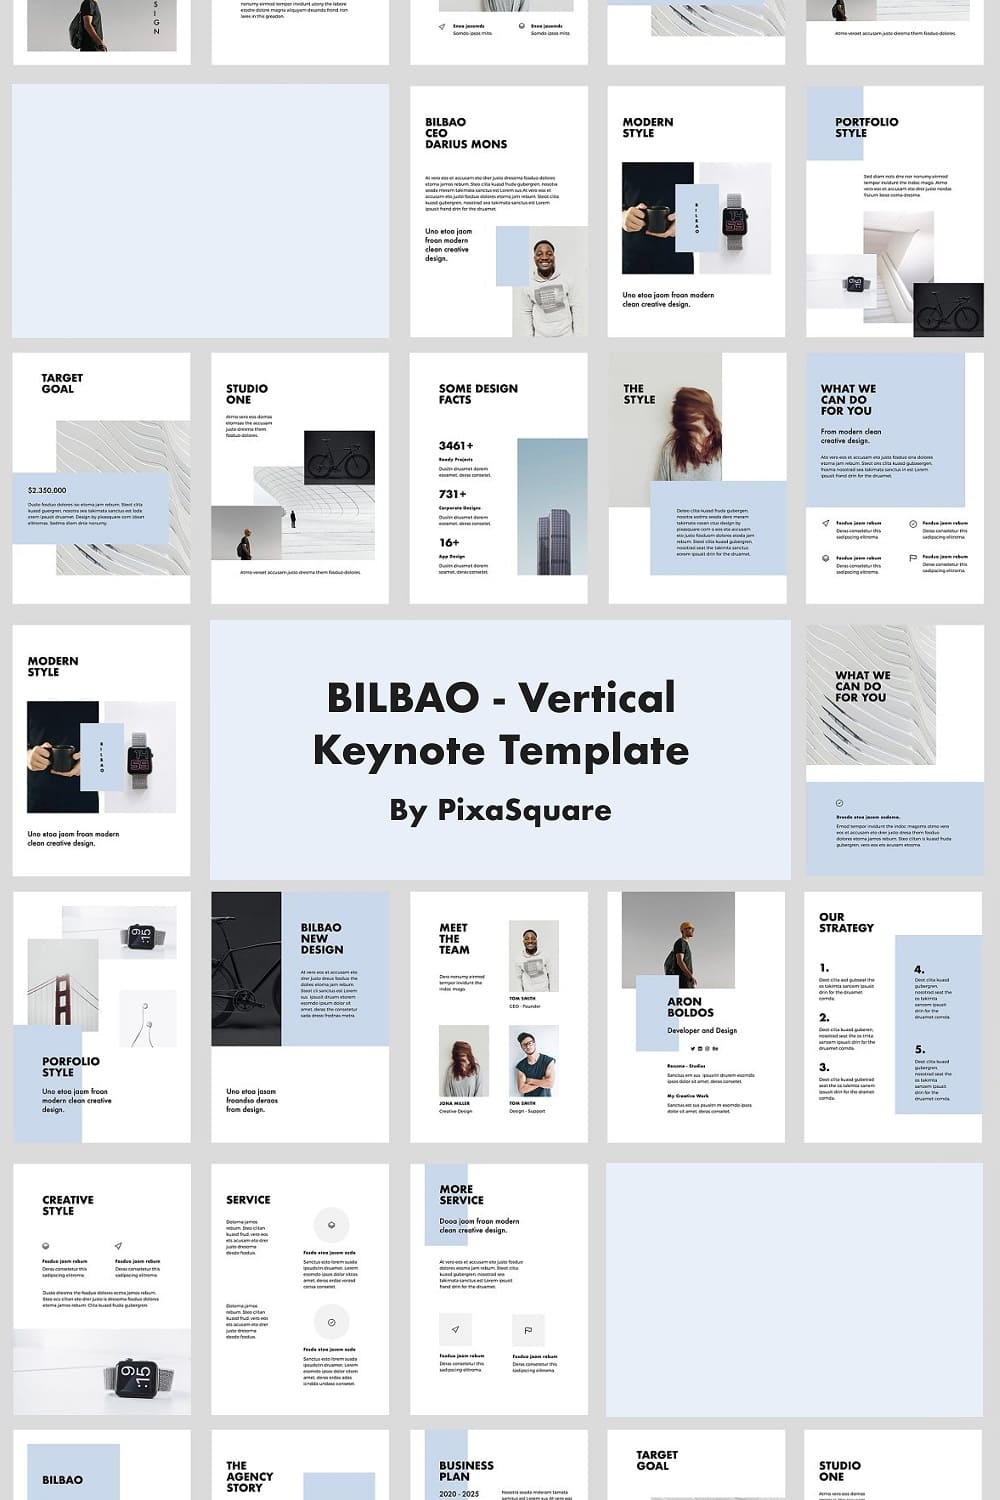 Bilbao - Vertical Keynote Template by PixaSquare, 28 slides.